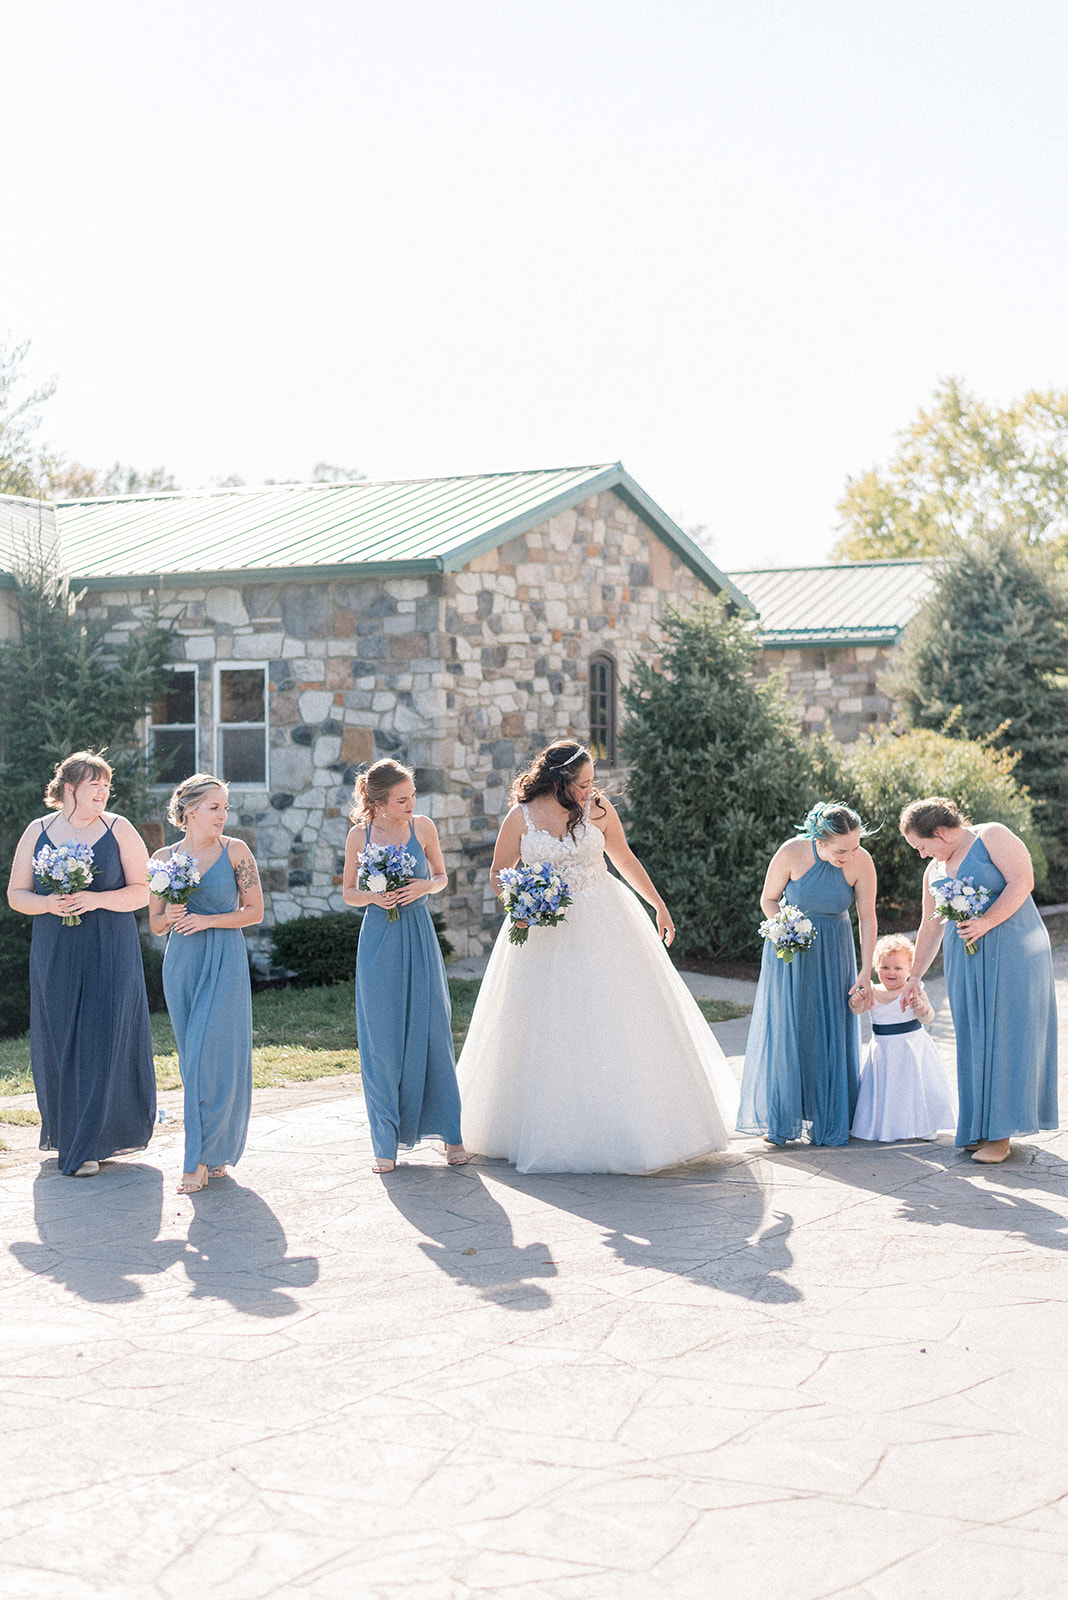 Pennsylvania wedding photographer captures bride walking with flower girl and bridesmaids